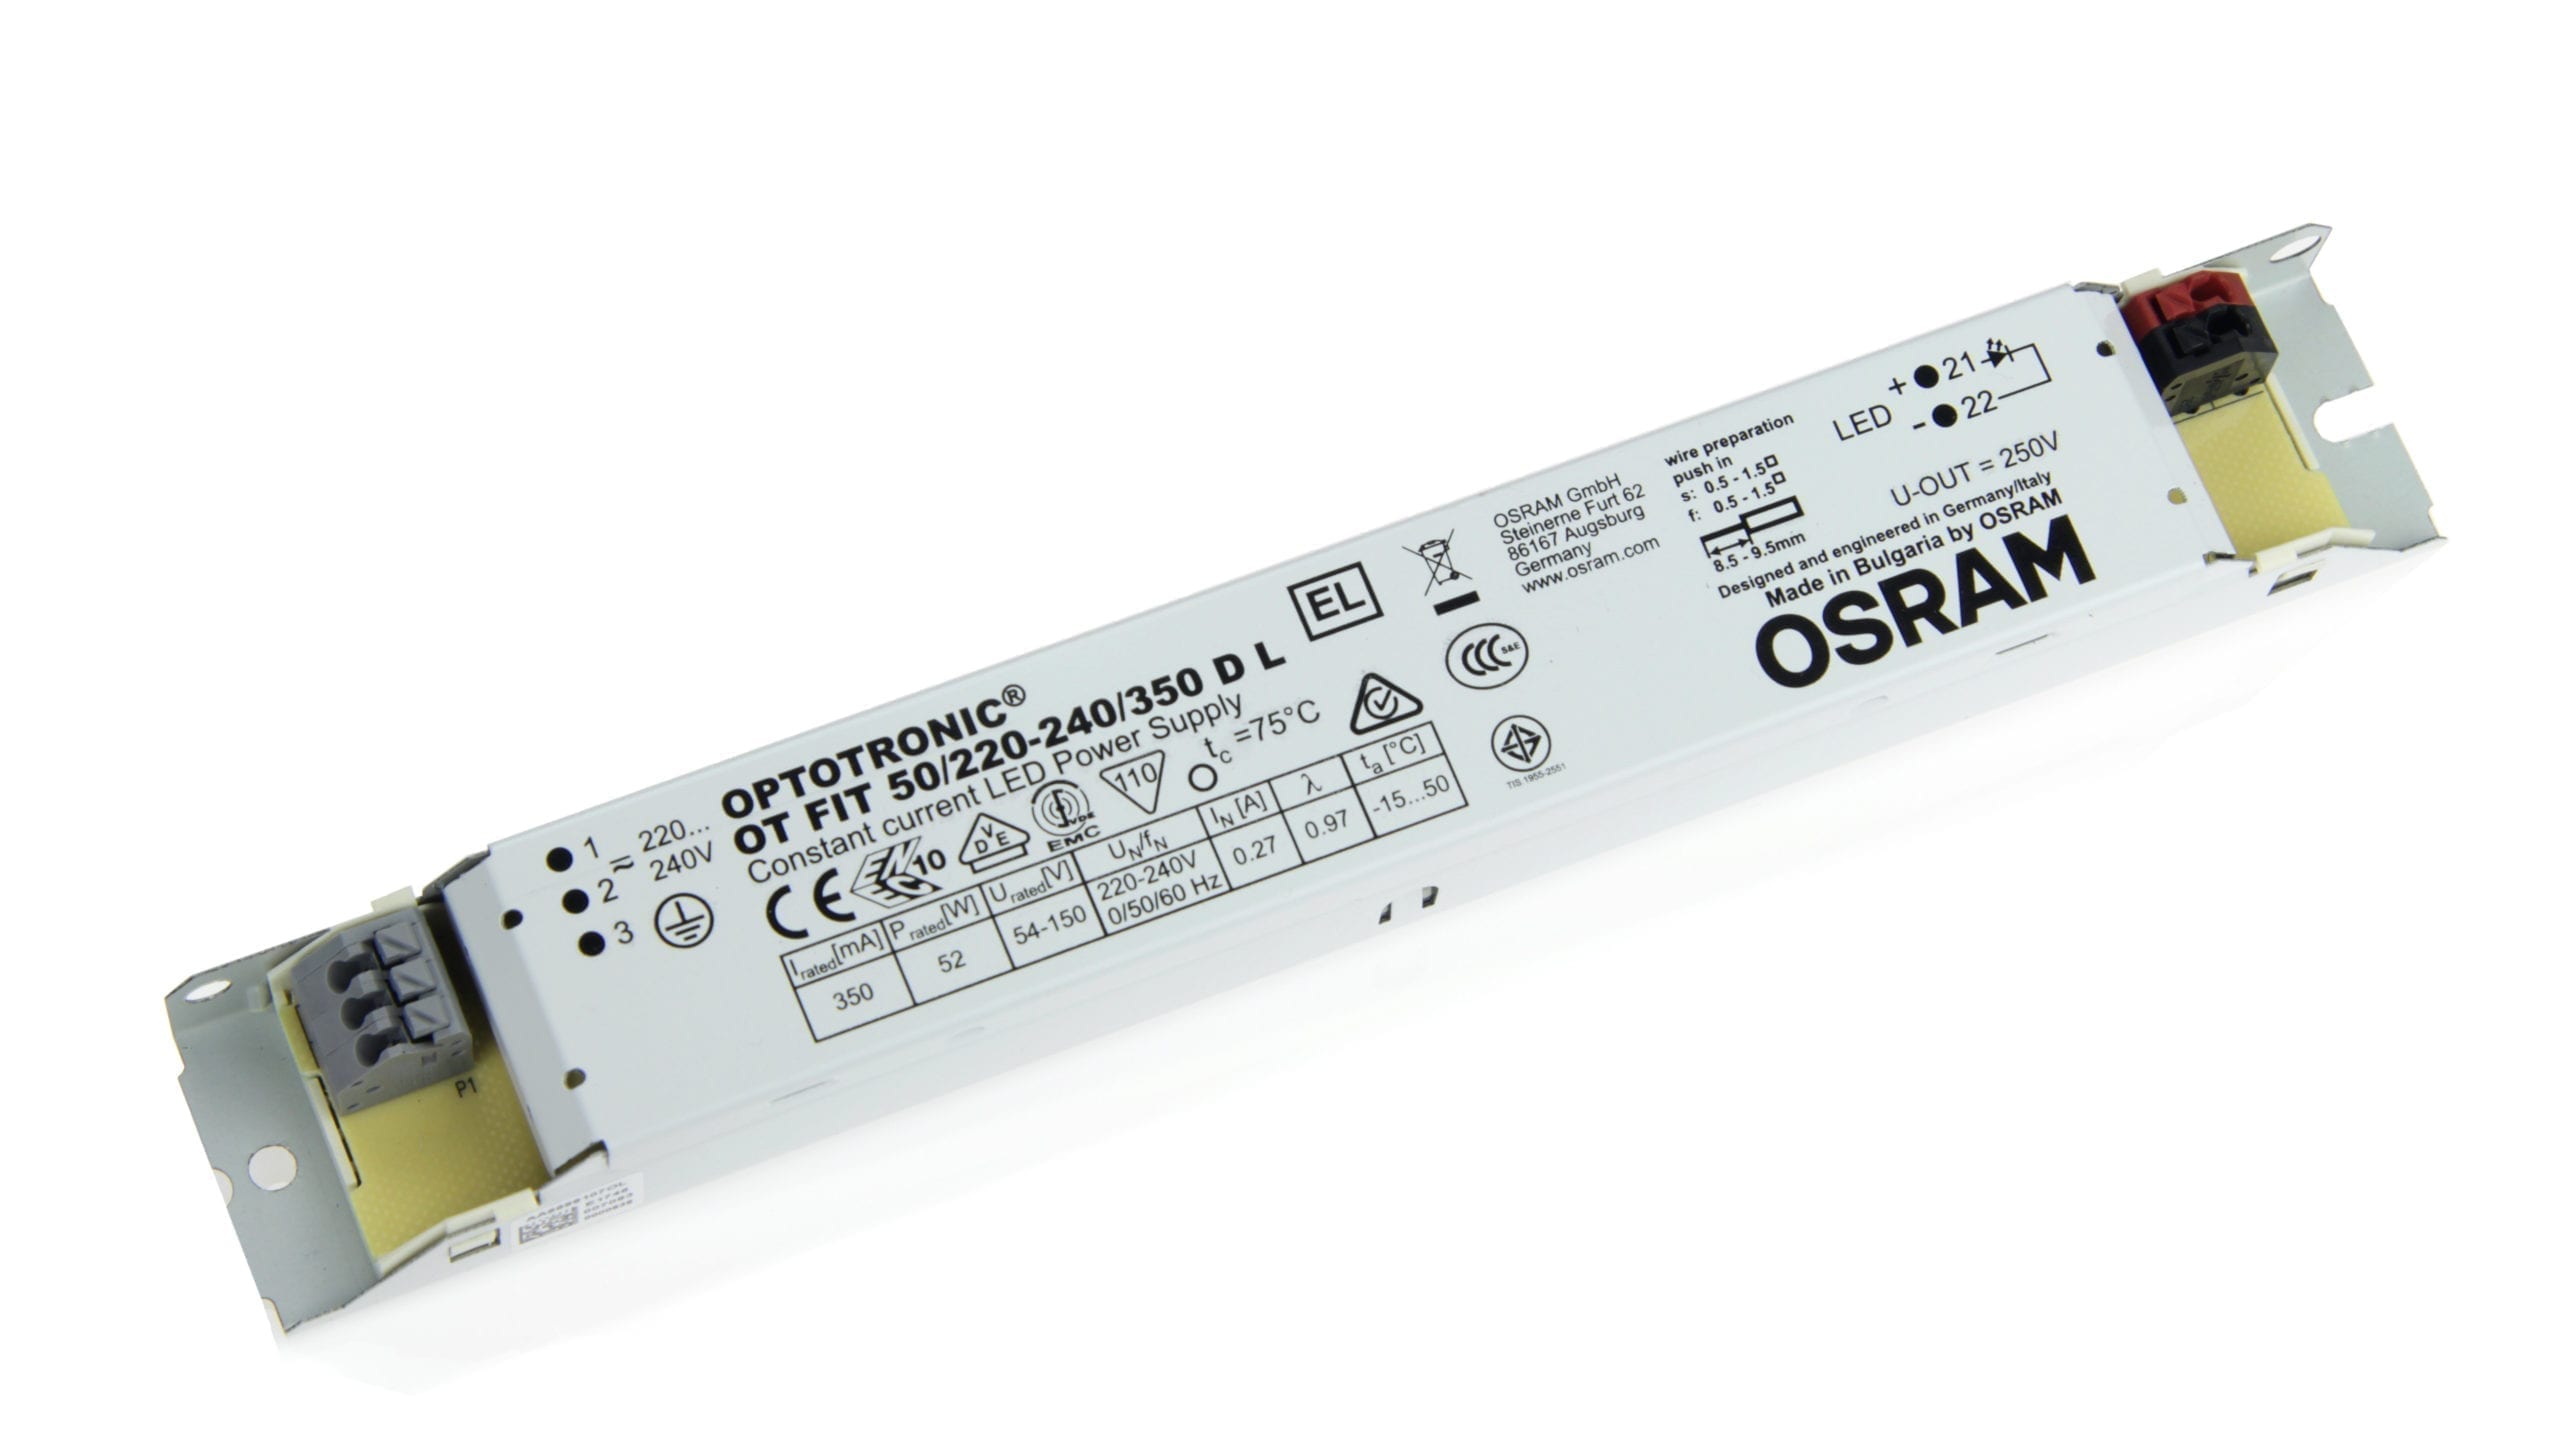 LED Alimentatore OSRAM - OT FIT 50 220-240 350 D L per componenti LED SVETOCH